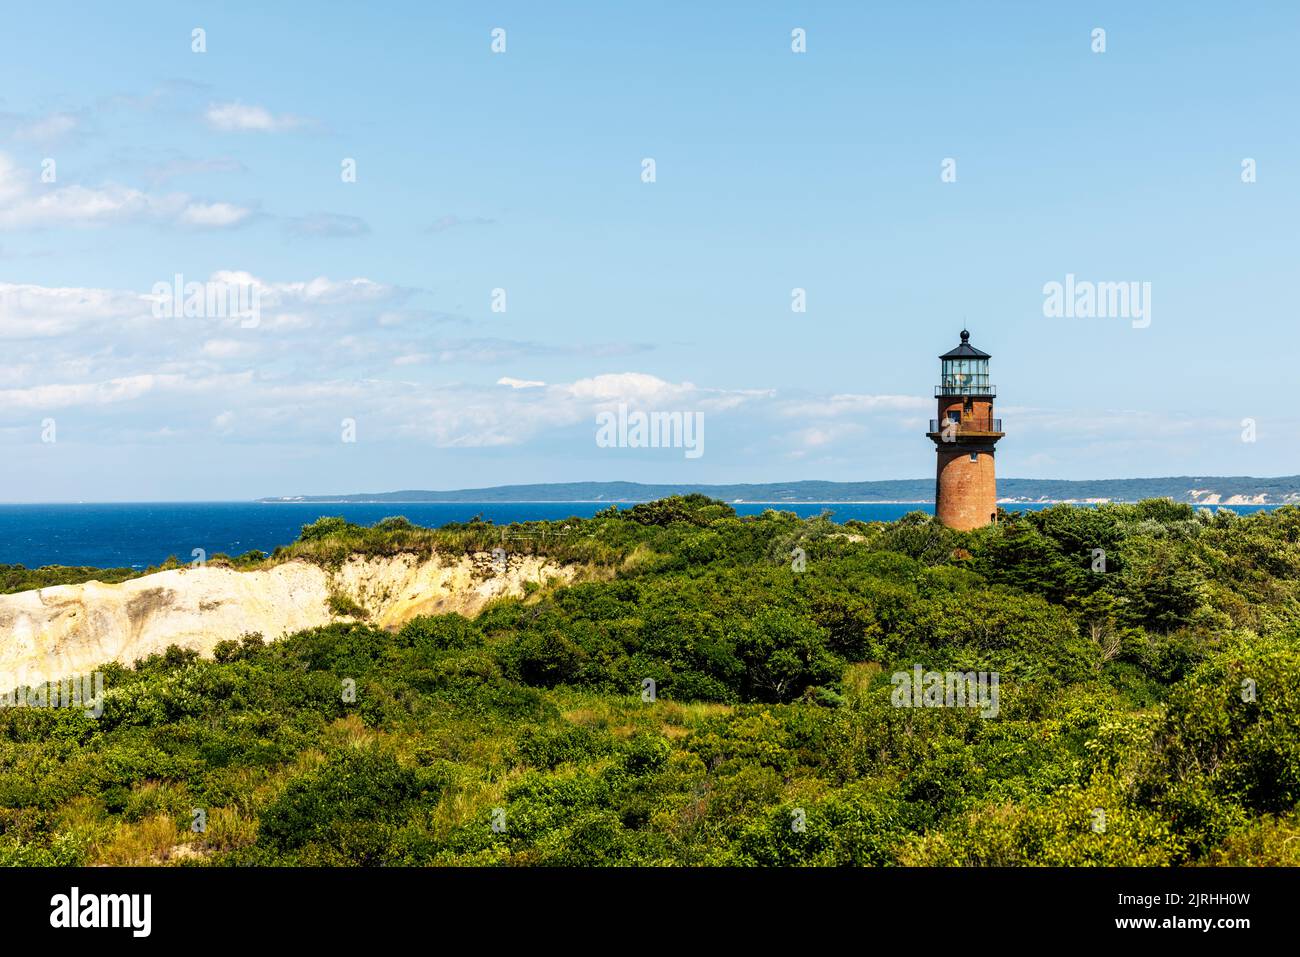 Gay Head Lighthouse overlooking the Rhode Island Sound in Aquinnah, Massachusetts on Martha's Vineyard. Stock Photo